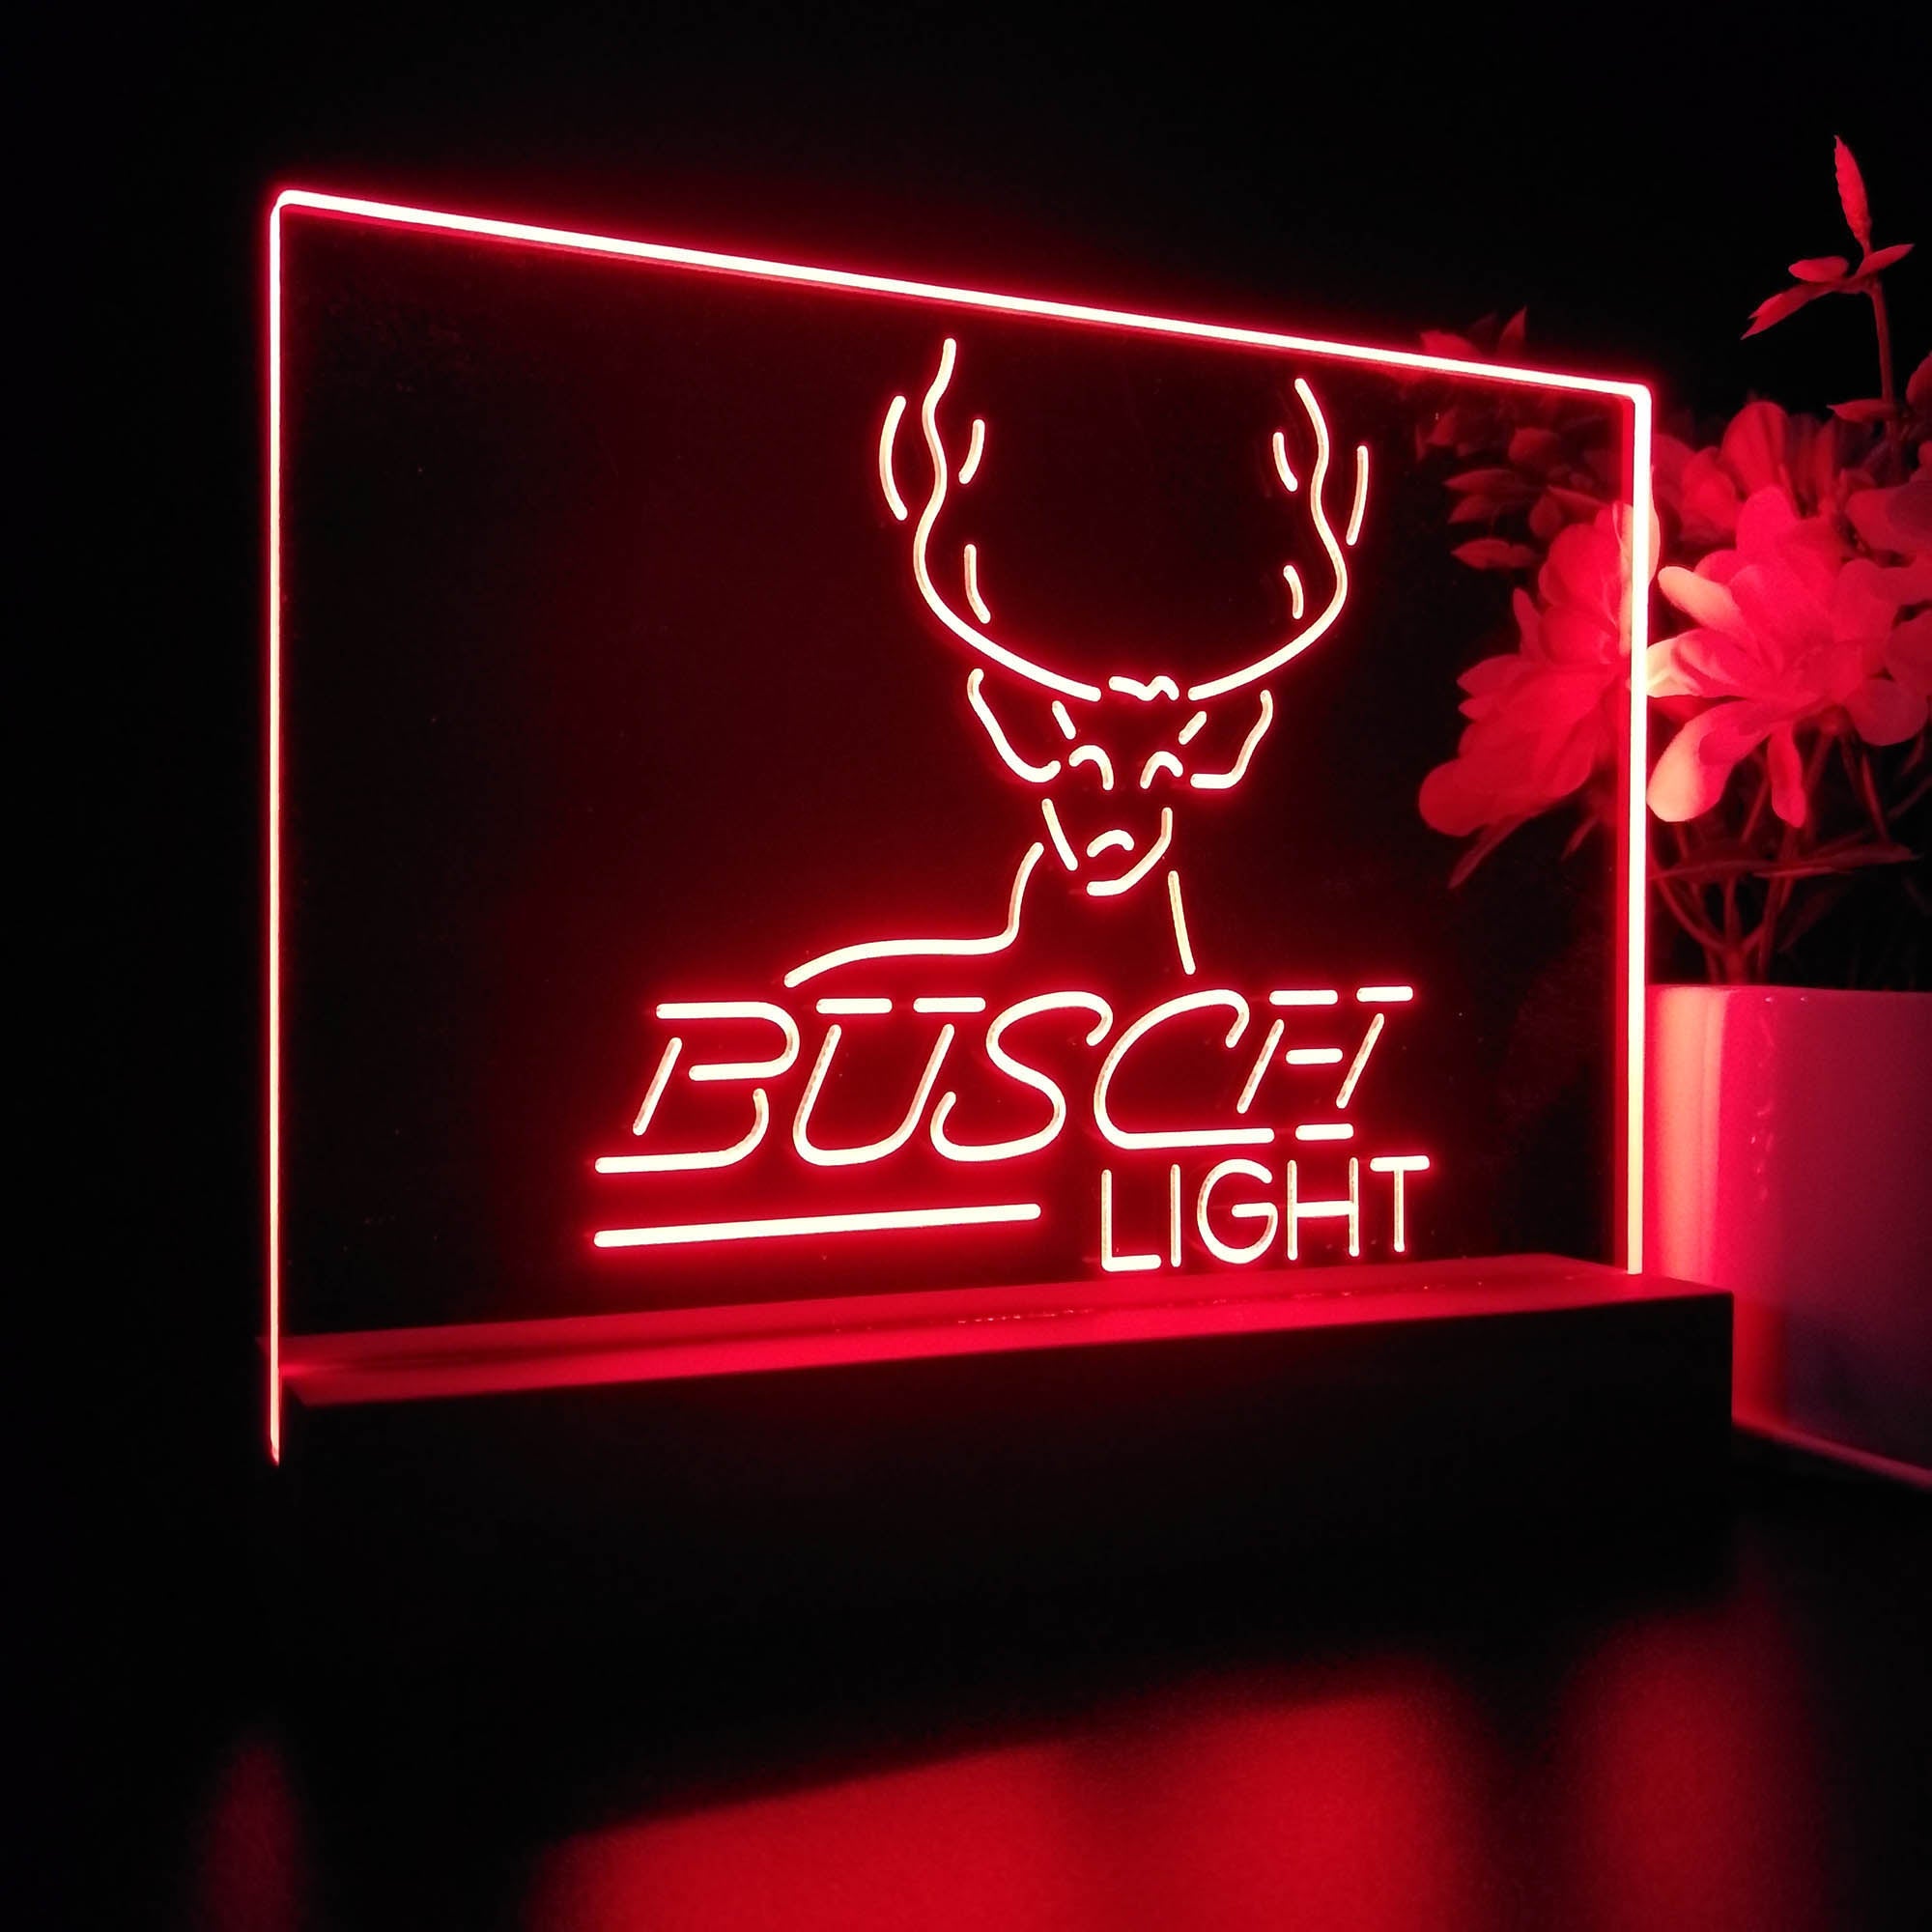 Buschs Deer Hunting Beer Light Night Light LED Sign